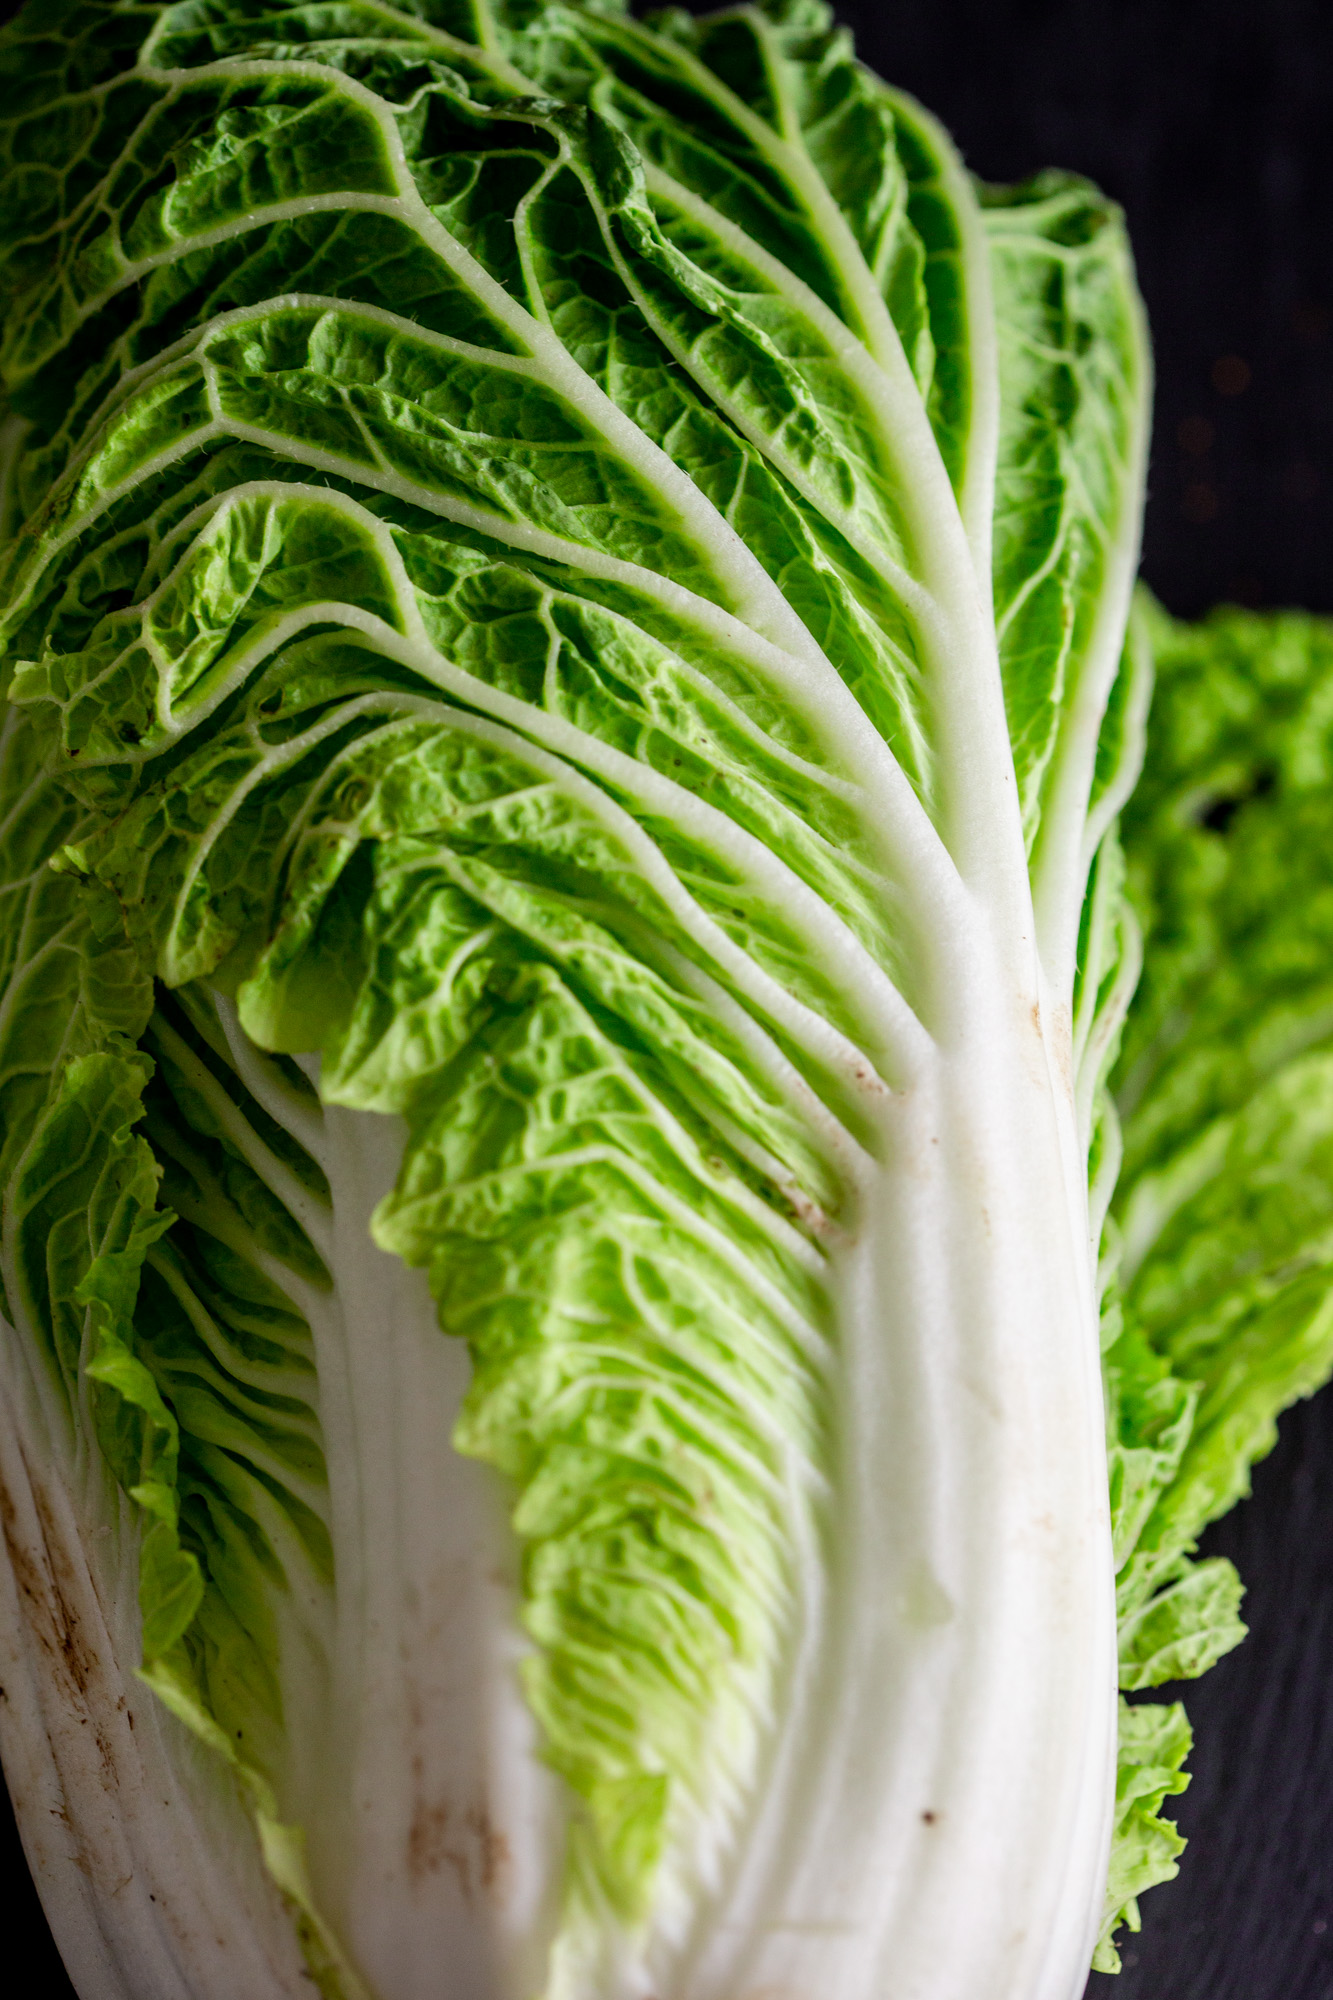 Raw vegan recipes with napa cabbage.